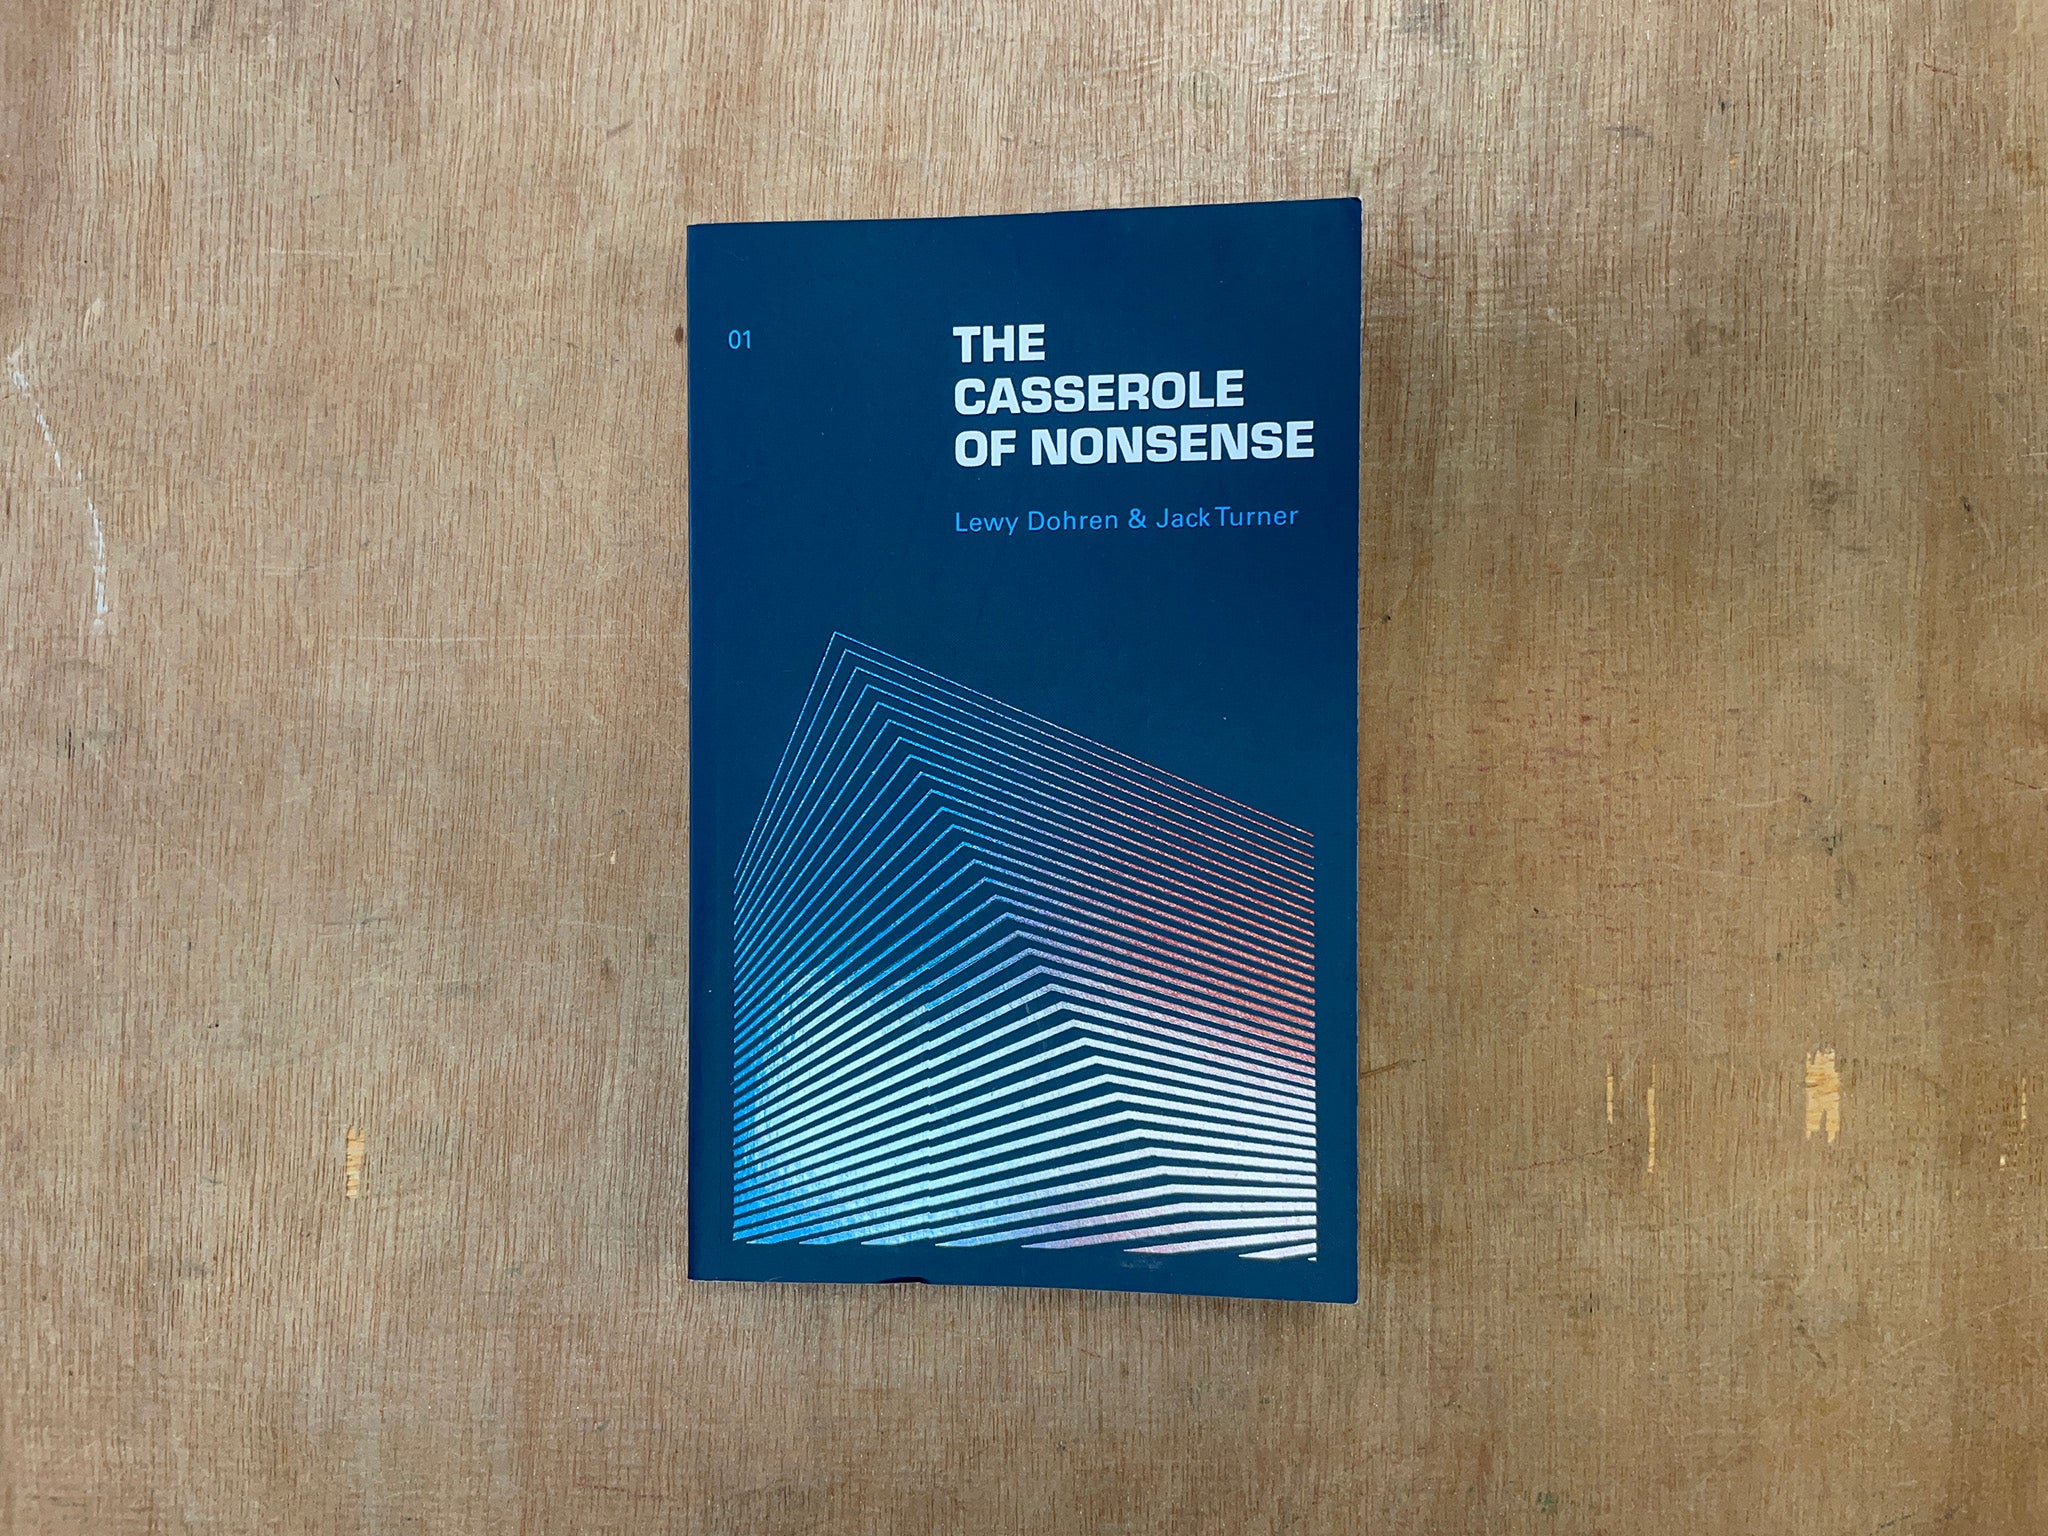 THE CASSEROLE OF NONSENSE by Lewis Dohren & Jack Turner